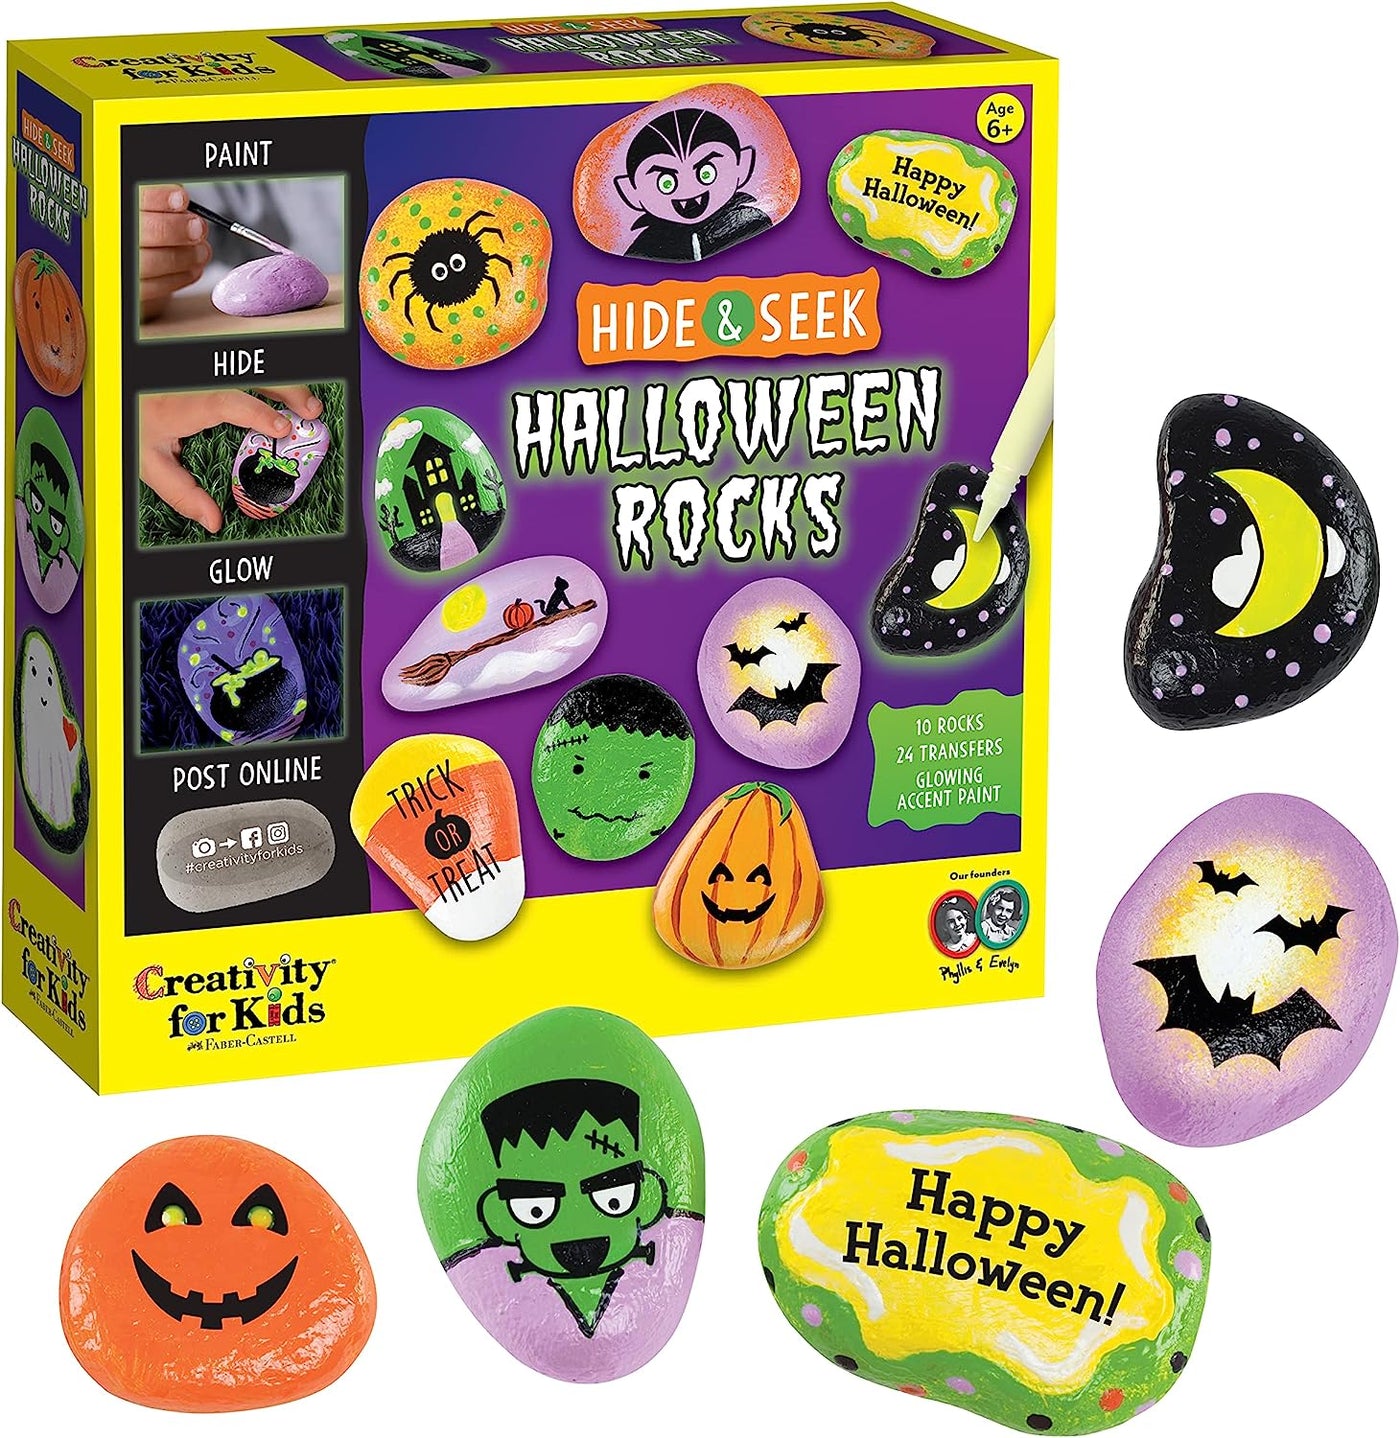 Hide & Seek Halloween Rocks